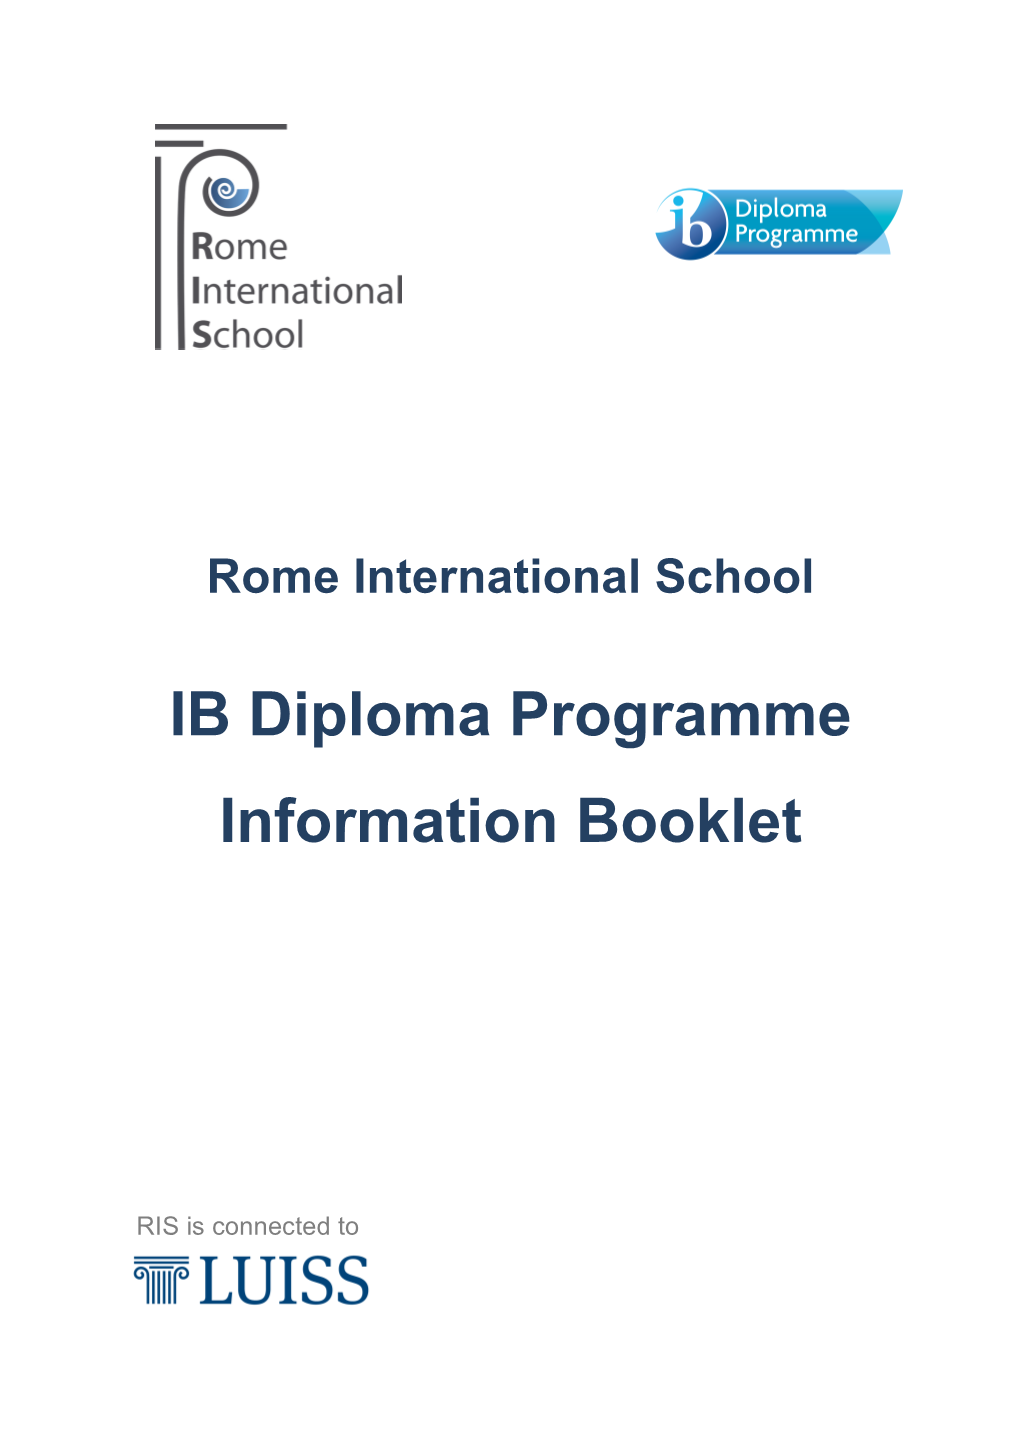 IB Diploma Programme Information Booklet